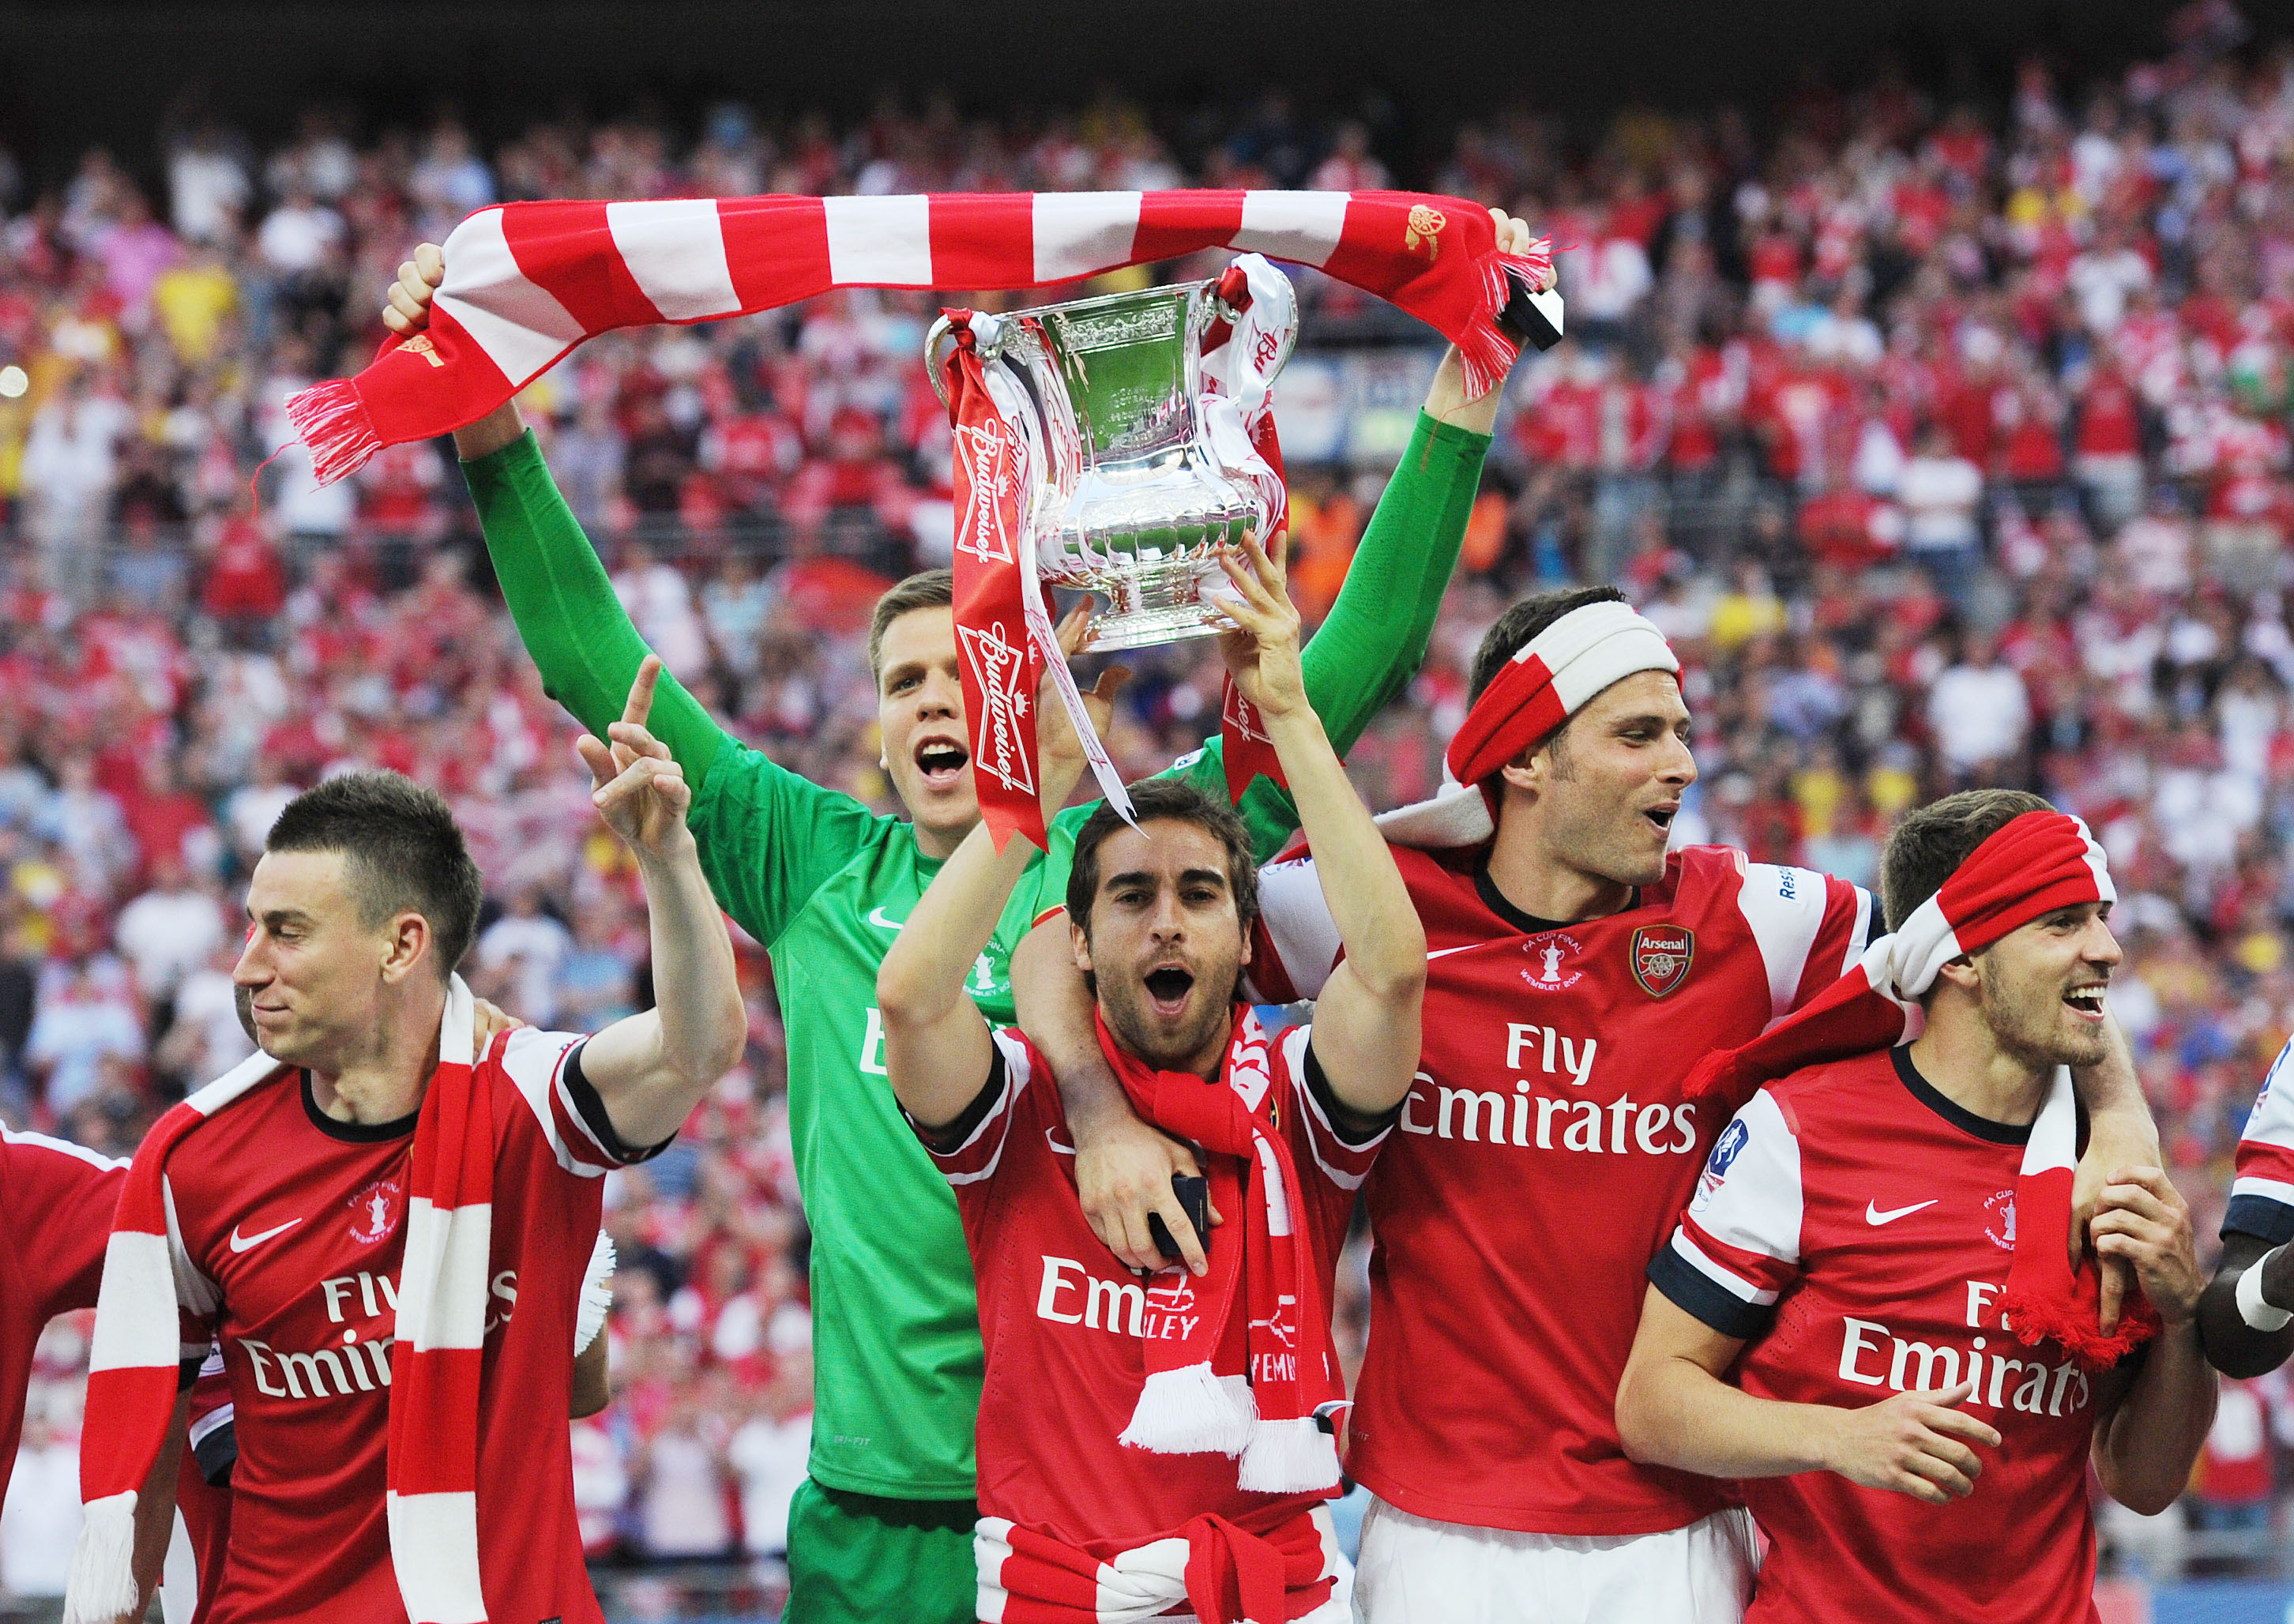 Arsenal vann FA-cupen efter nio års titeltorka.